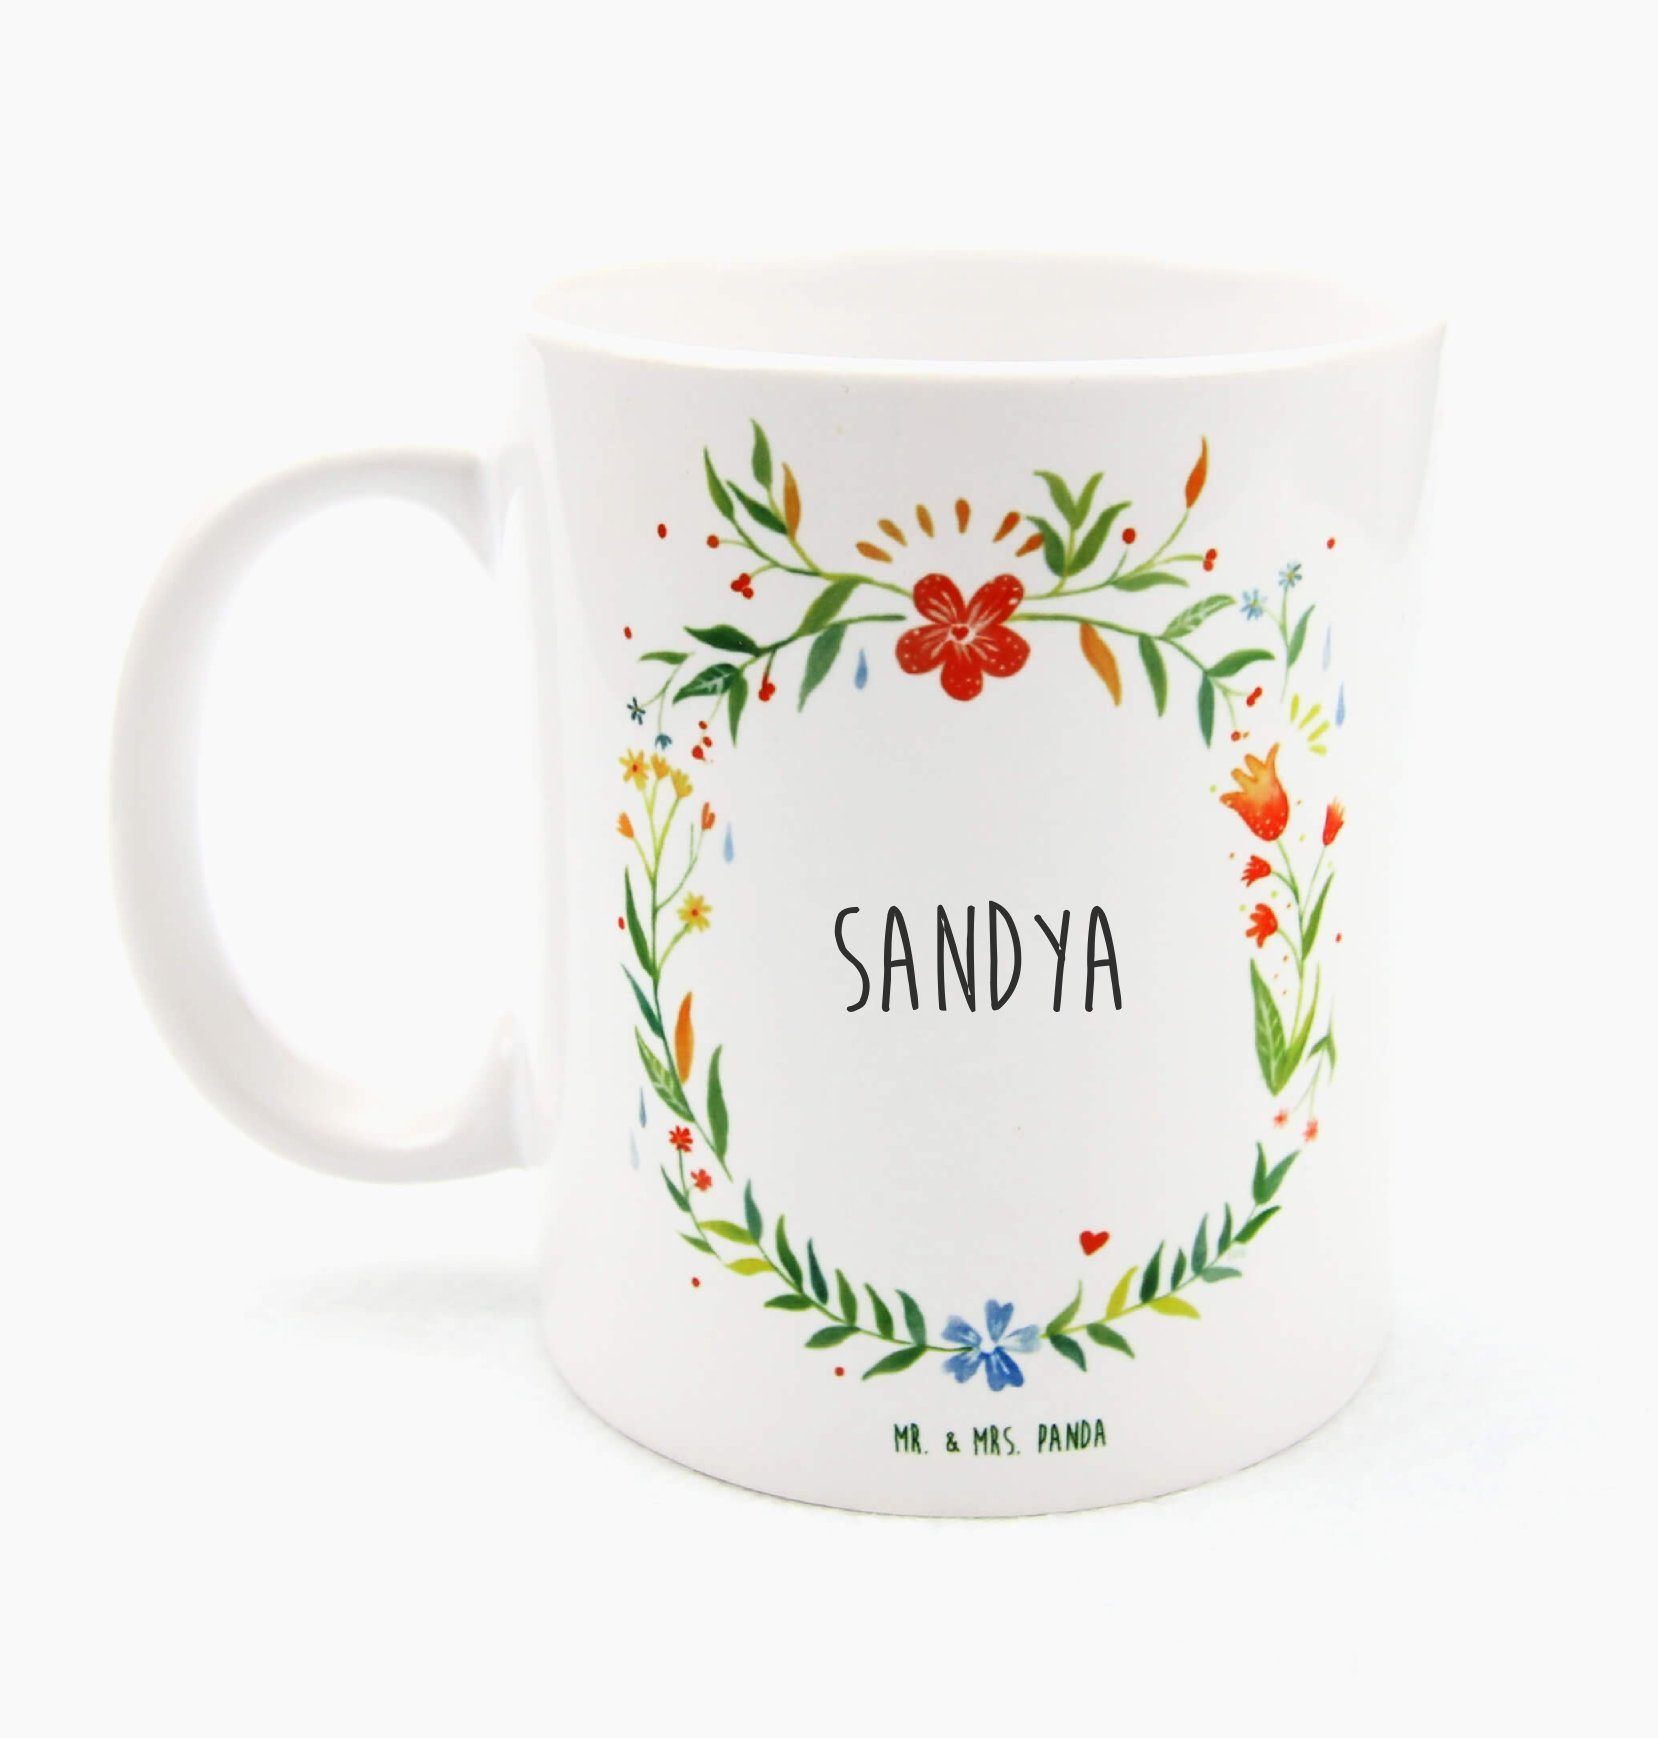 Mr. & Mrs. Panda Tasse Sandya - Geschenk, Becher, Kaffeebecher, Tasse, Büro Tasse, Teetasse, Keramik